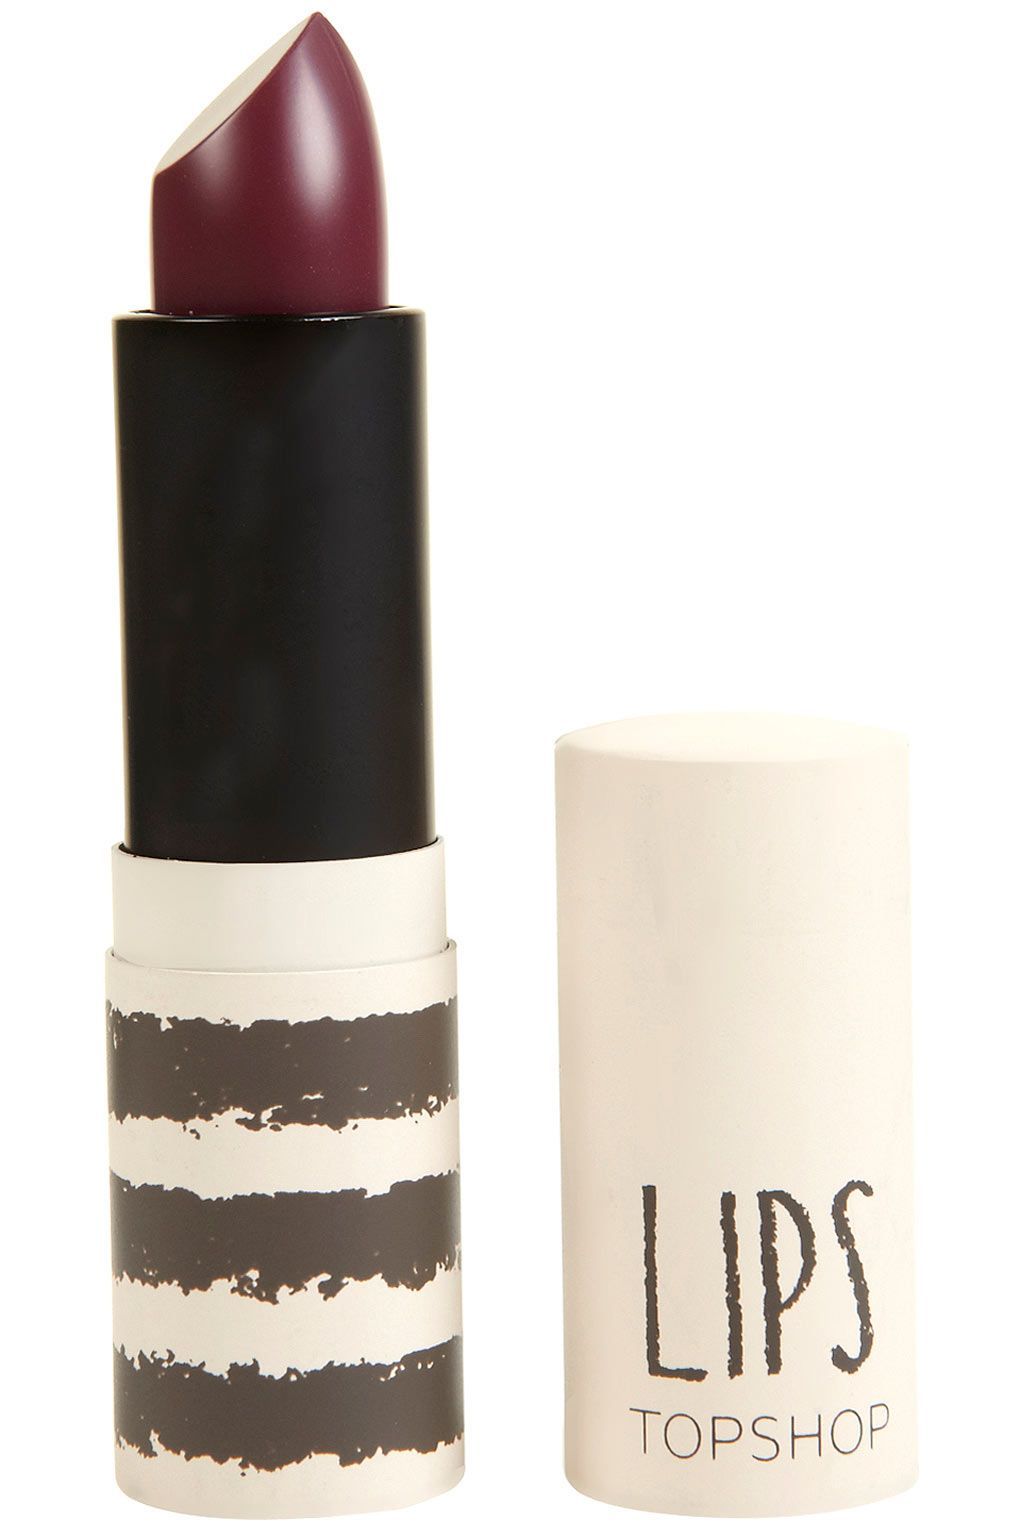 #topshoppromqueen Satin matte finish lipstick to smooth, hydrate and nourish lip